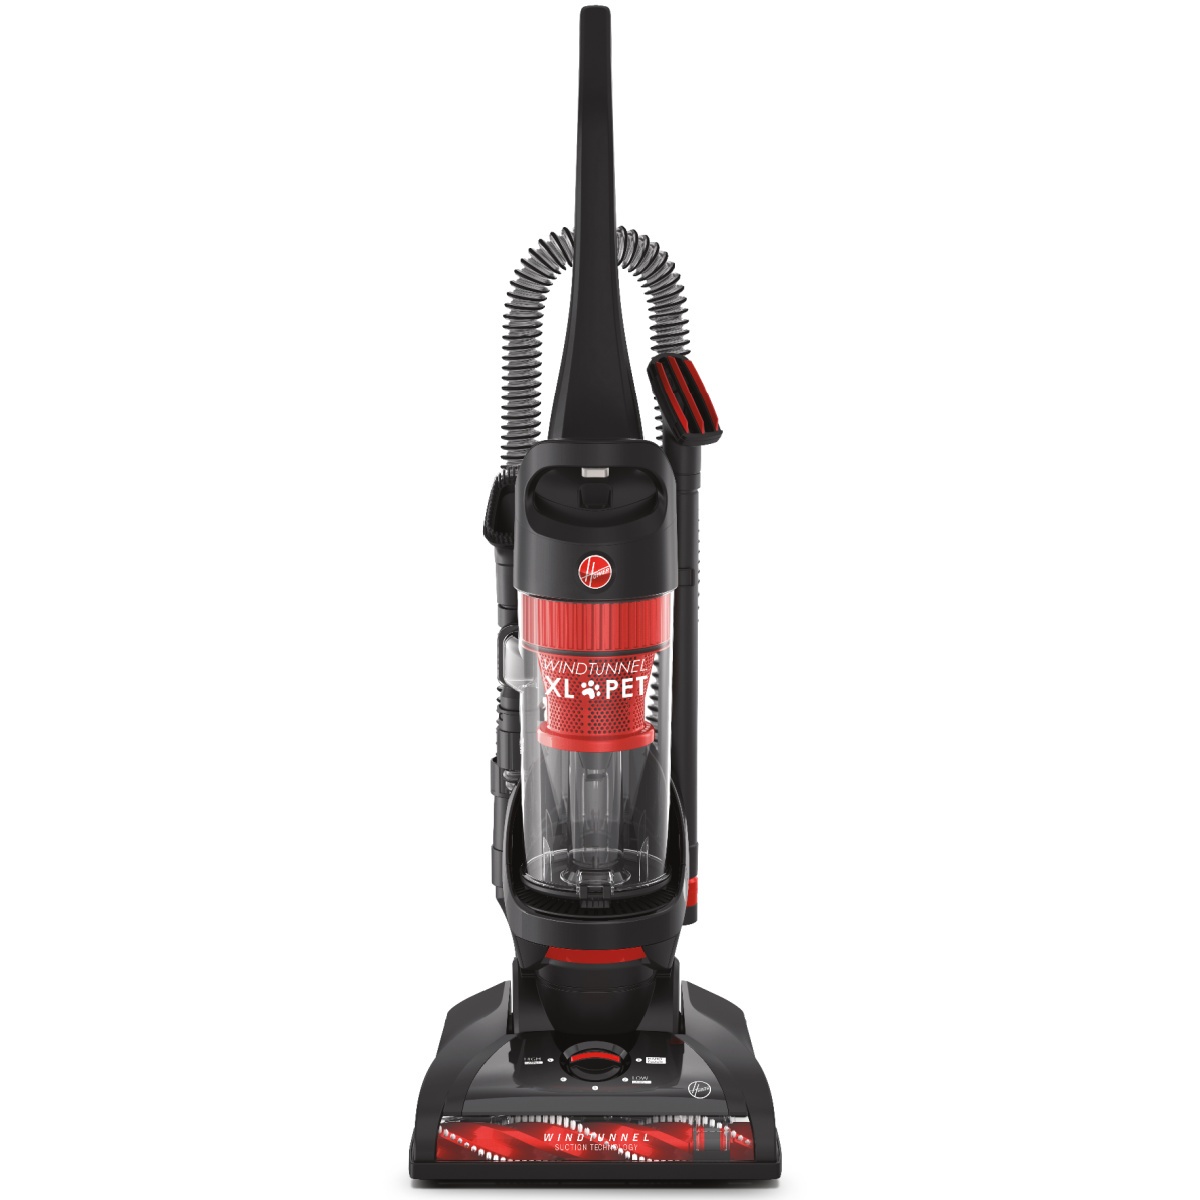 Hoover UH71105DI WindTunnel XL Pet Bagless Upright Vacuum